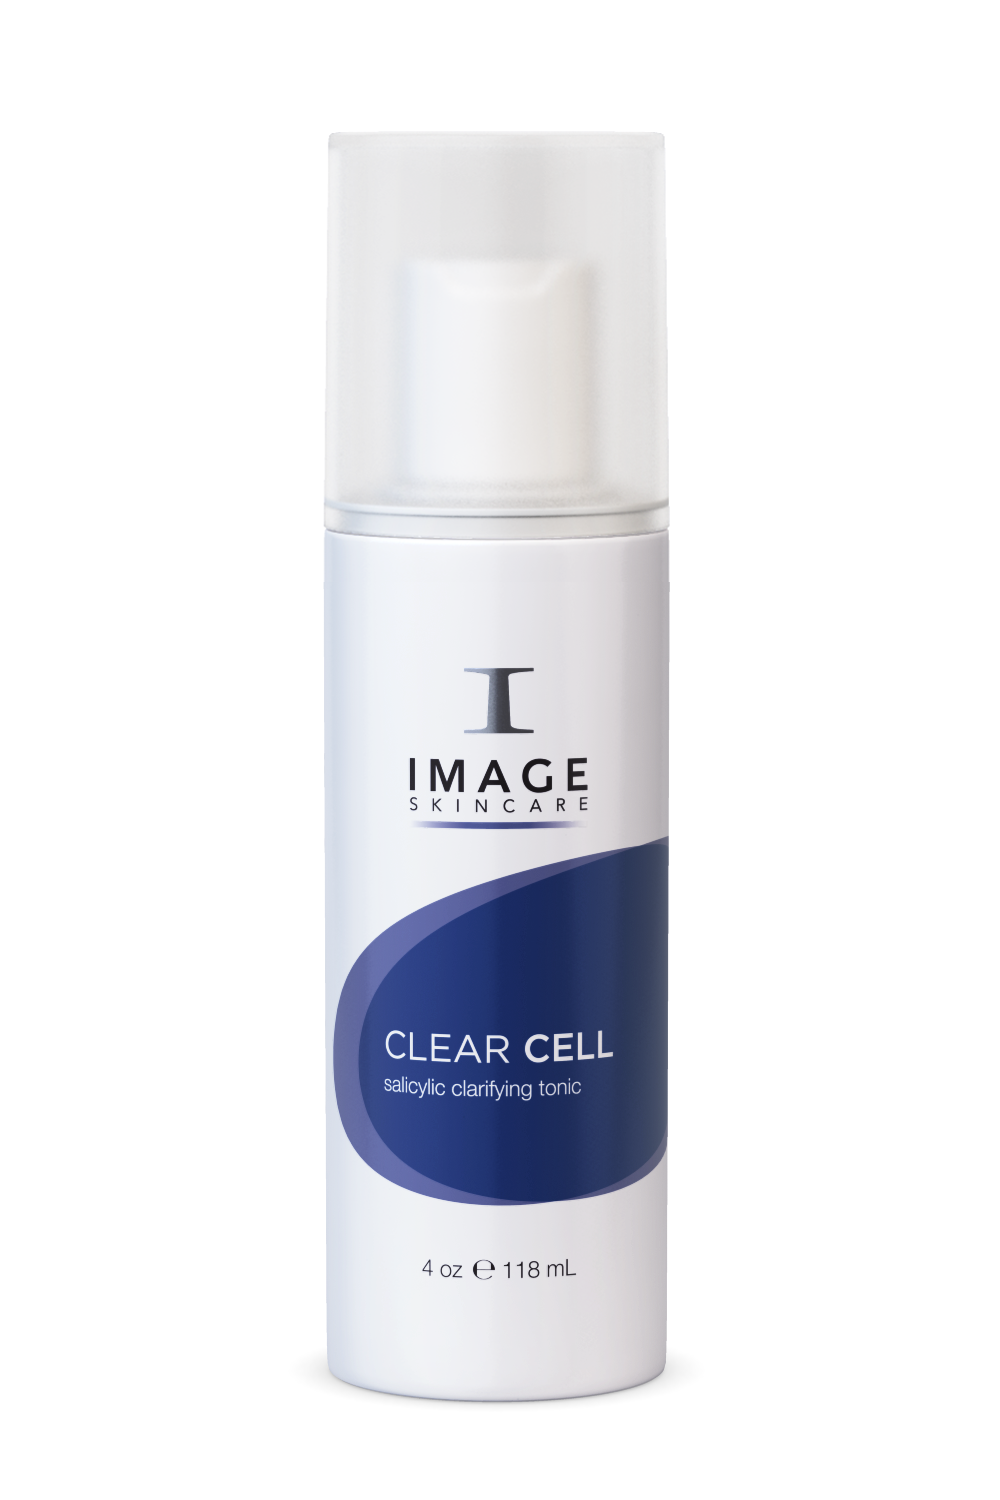 Image Skincare салициловый тоник. Image Clear Cell очищающий салициловый гель. Тоник для жирной кожи. Тоник для лица для жирной кожи.